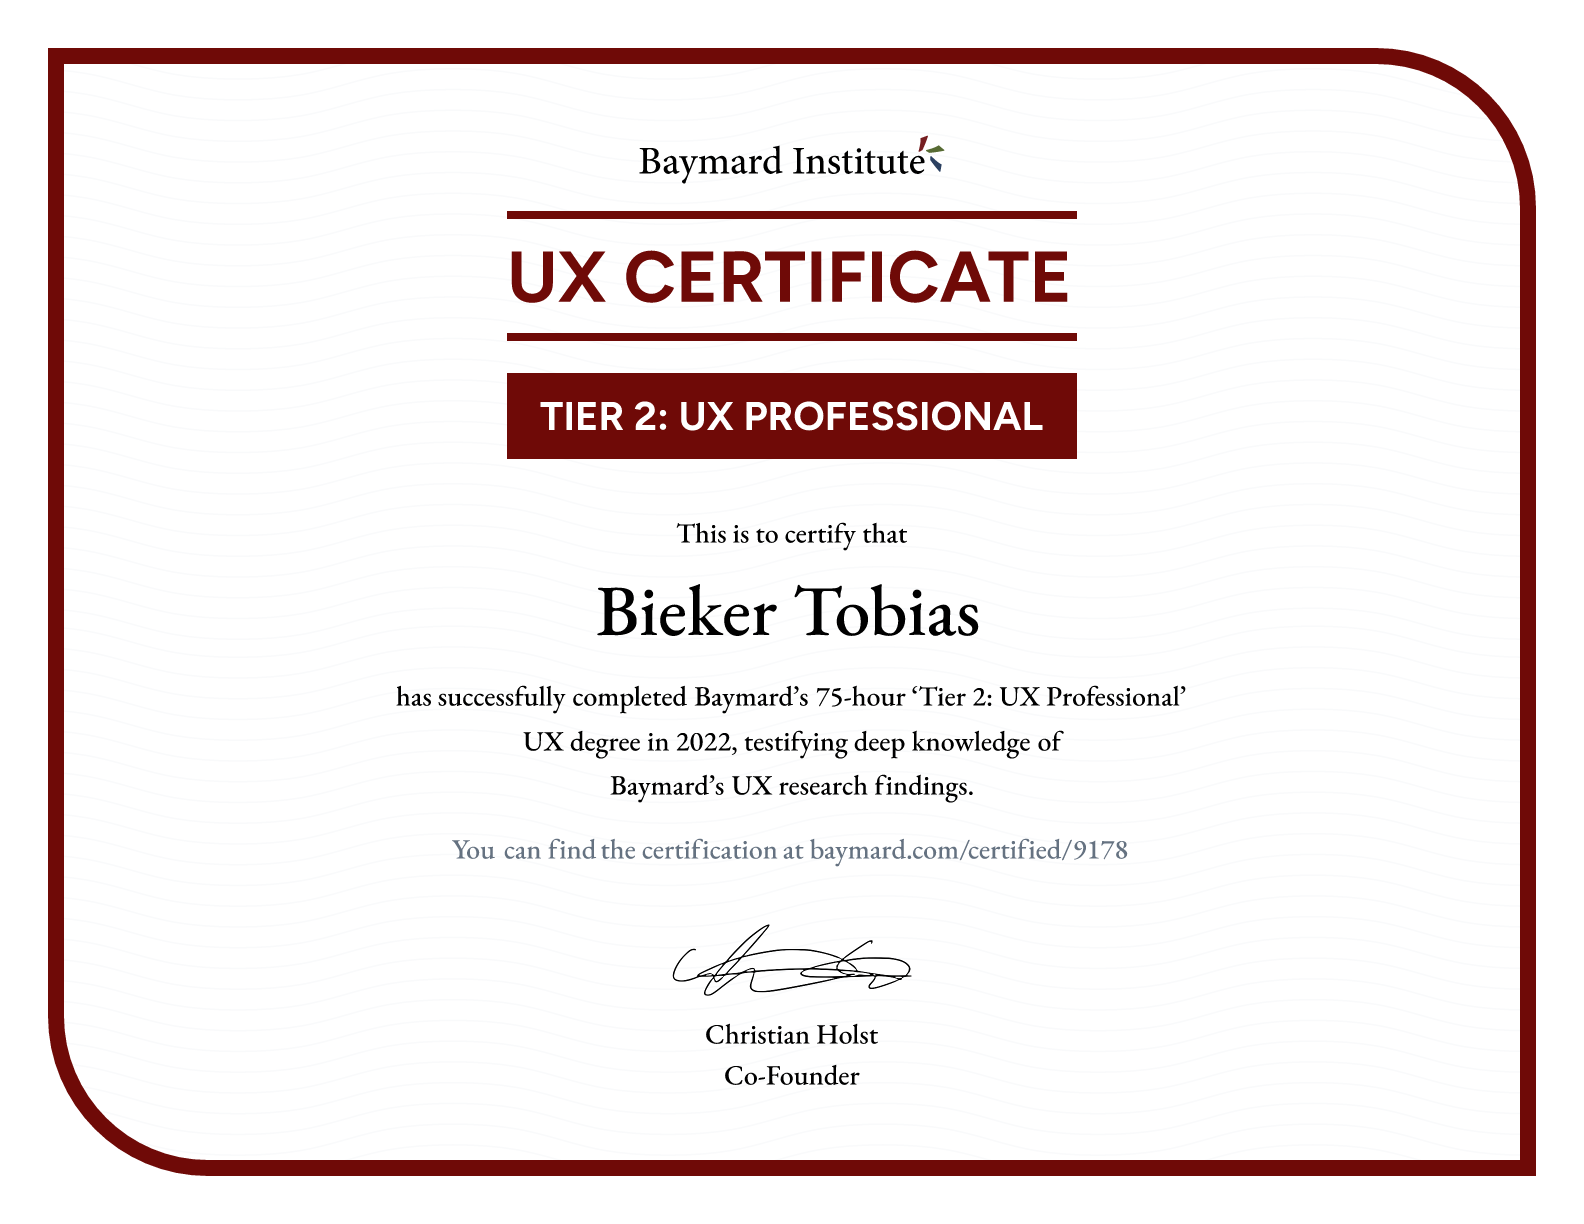 Bieker Tobias’s certificate